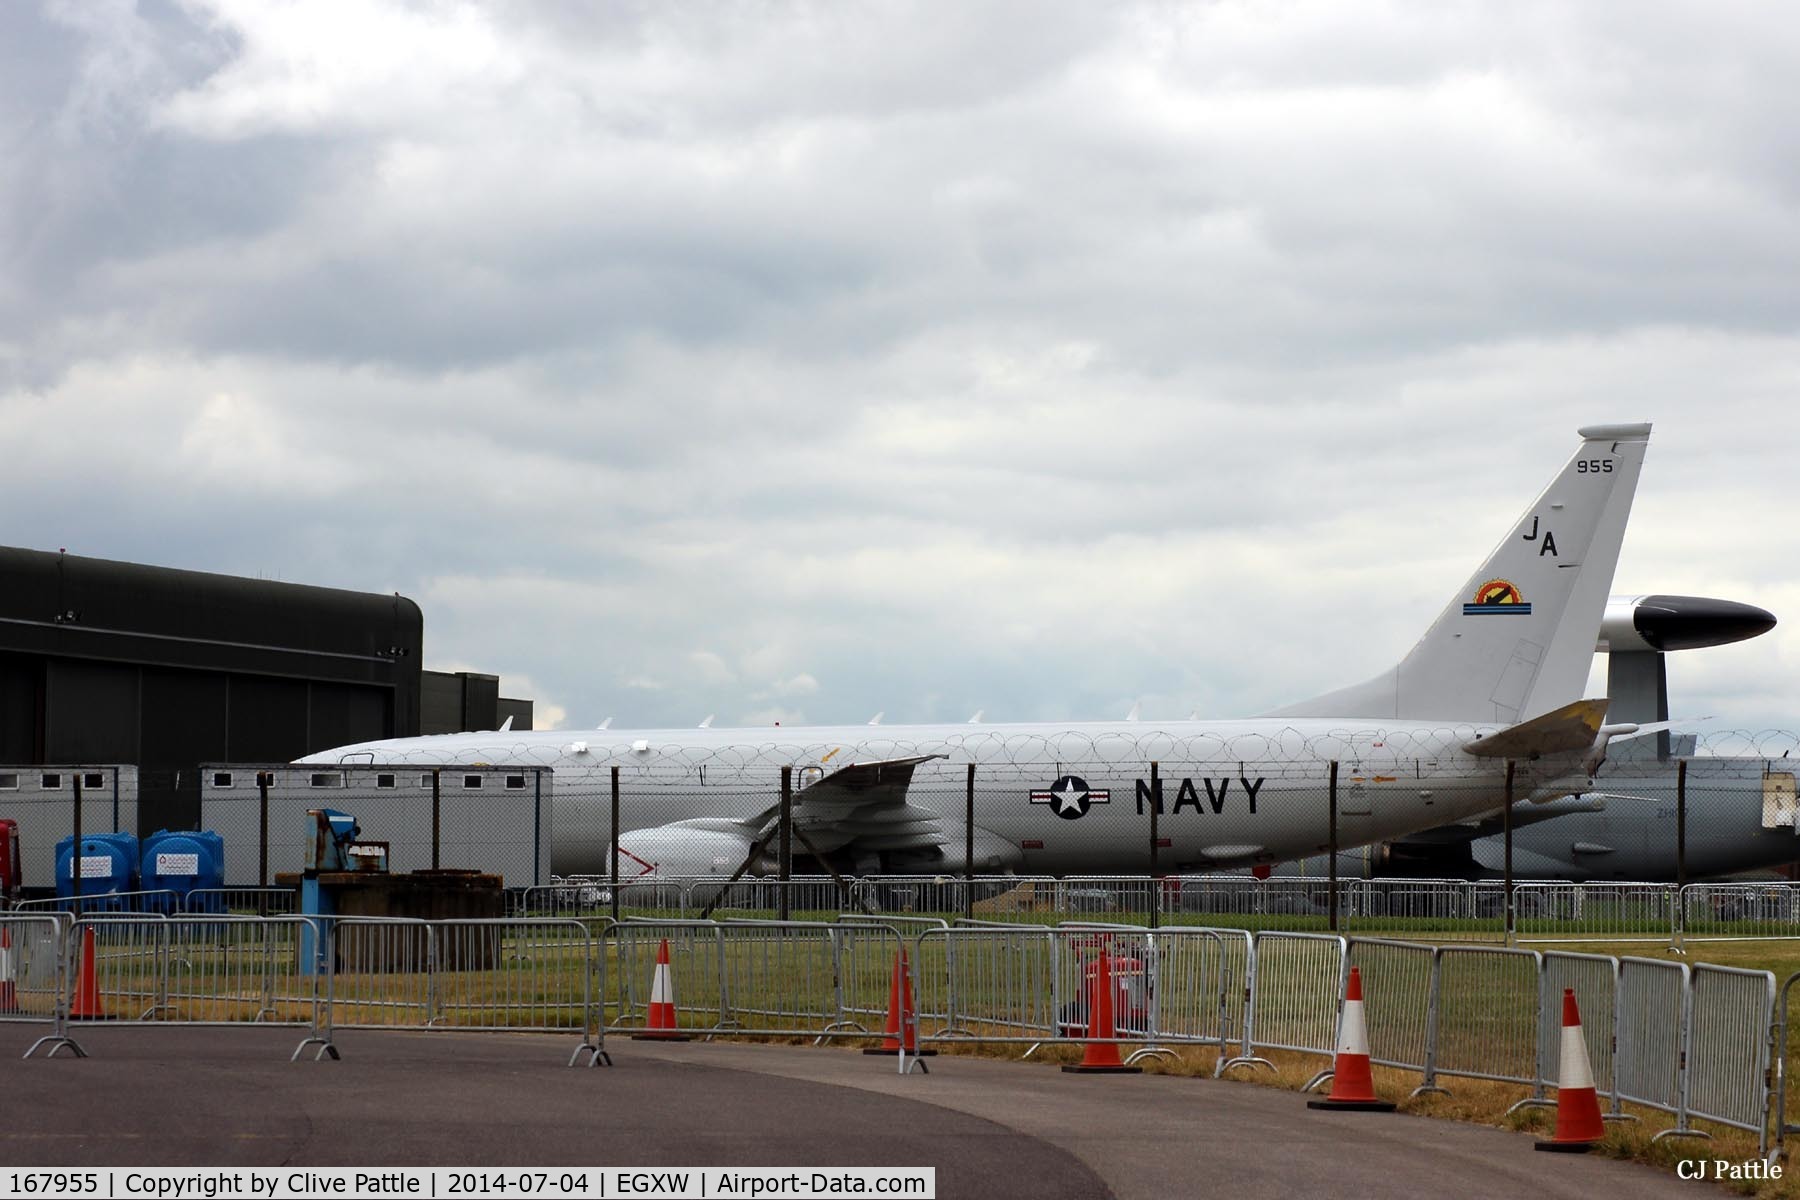 167955, 2011 Boeing P-8A Poseidon C/N 40595, Parked up at Waddington